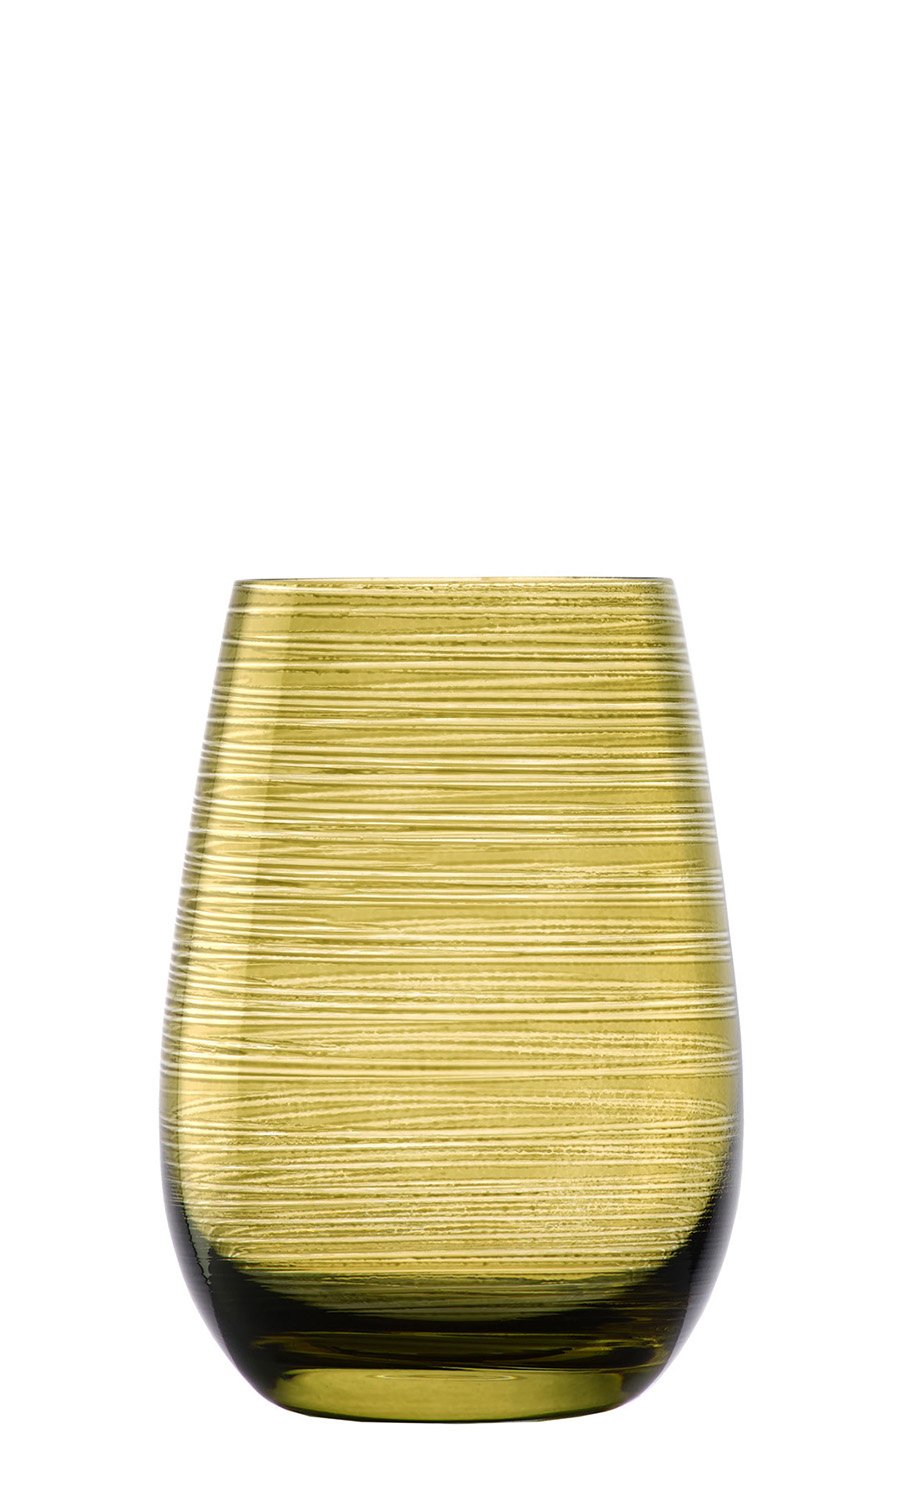 Stoelzle Twister Tumbler Olive Glass Set of 6 Lead Free Crystal